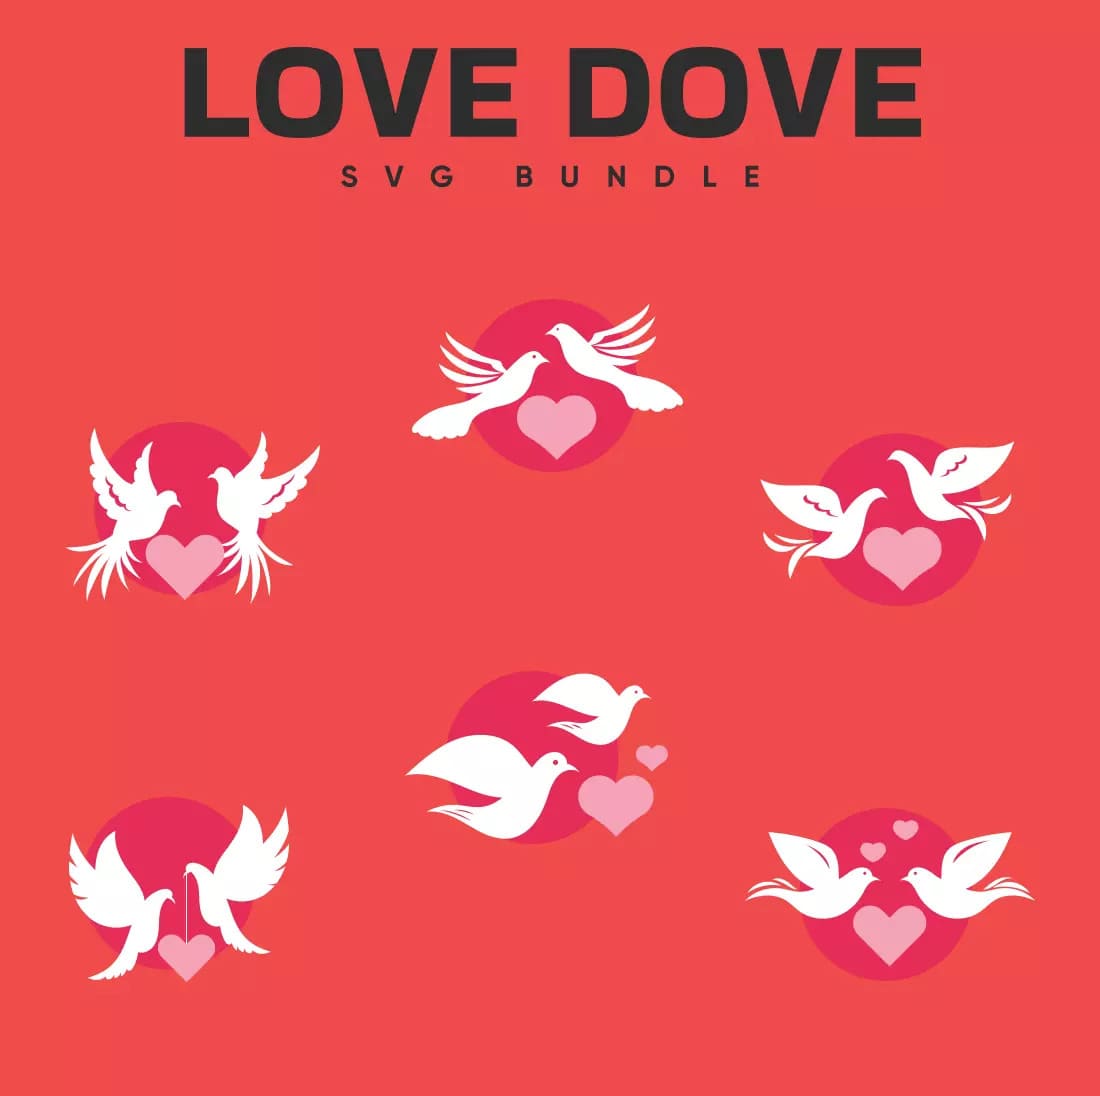 Love dove svg bundle.